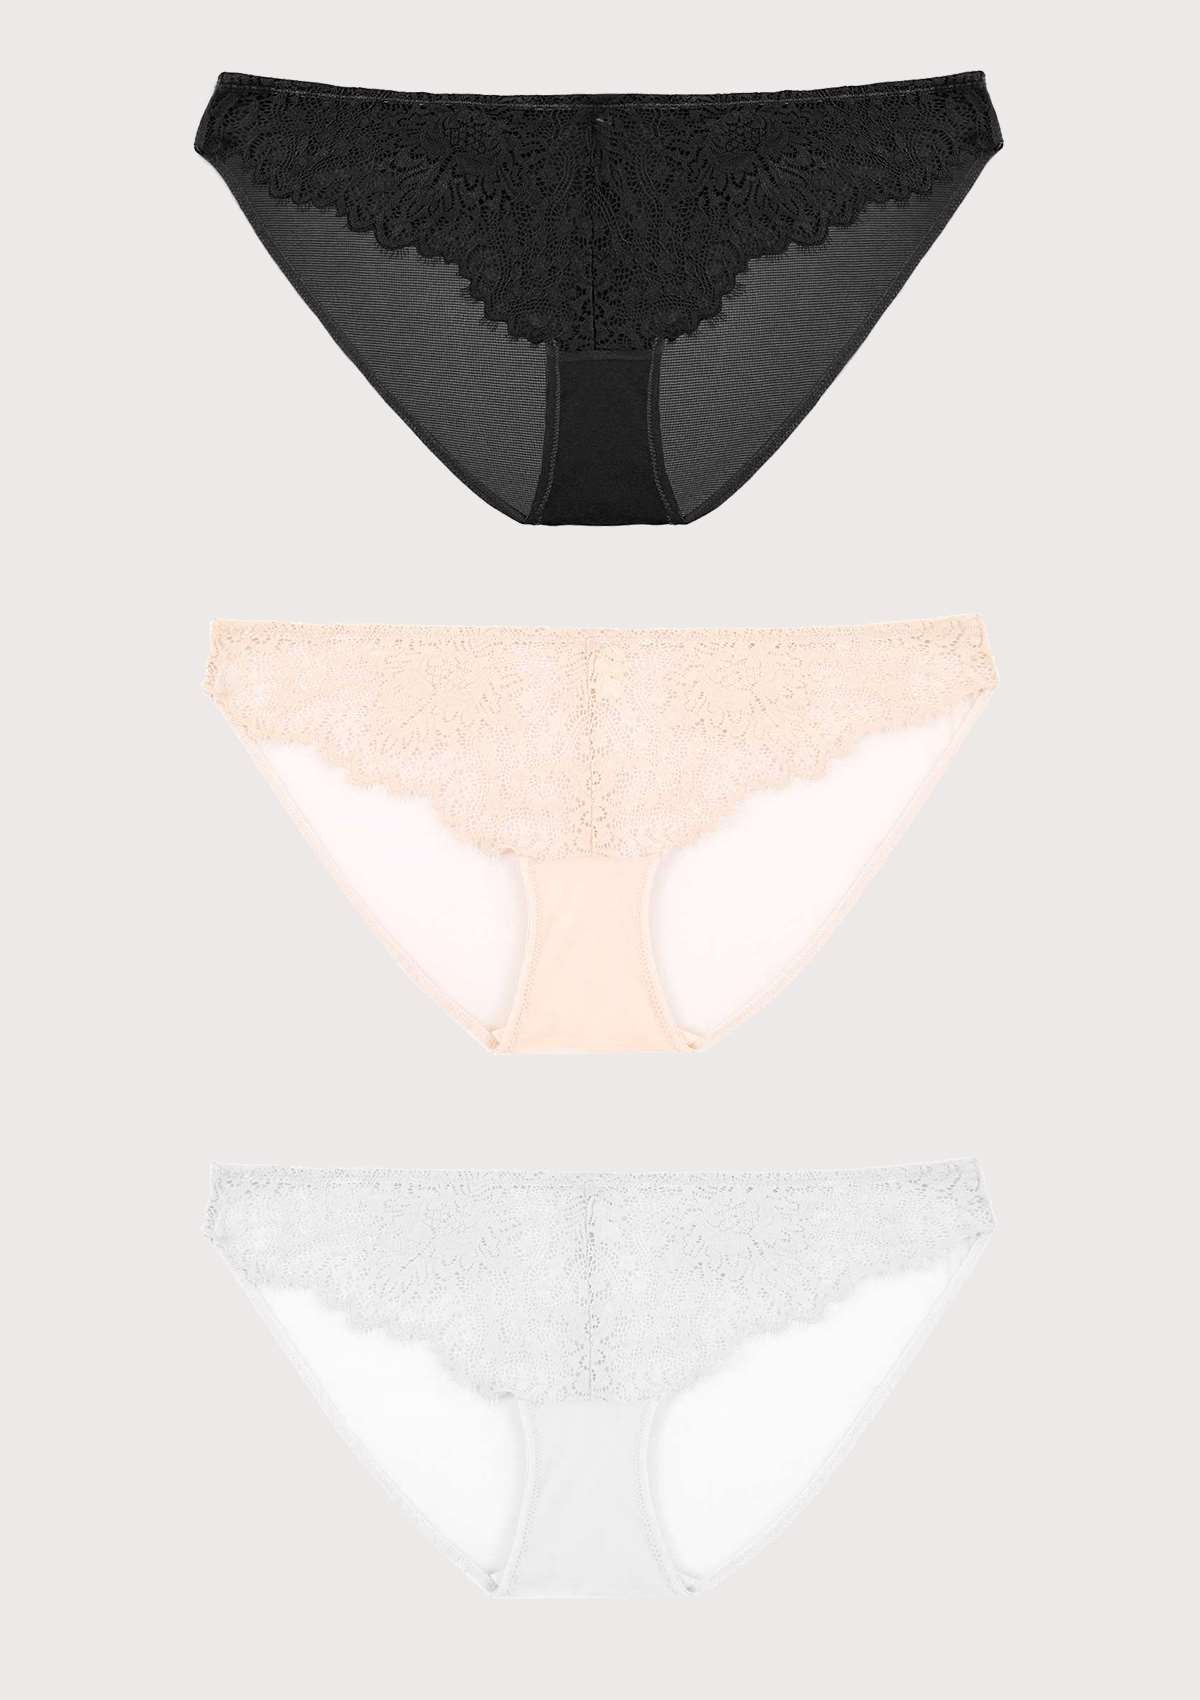 HSIA Sunflower Exquisite Lighweight Soft Lace Bikini Panties 3 Pack - L / Black+White+Pink